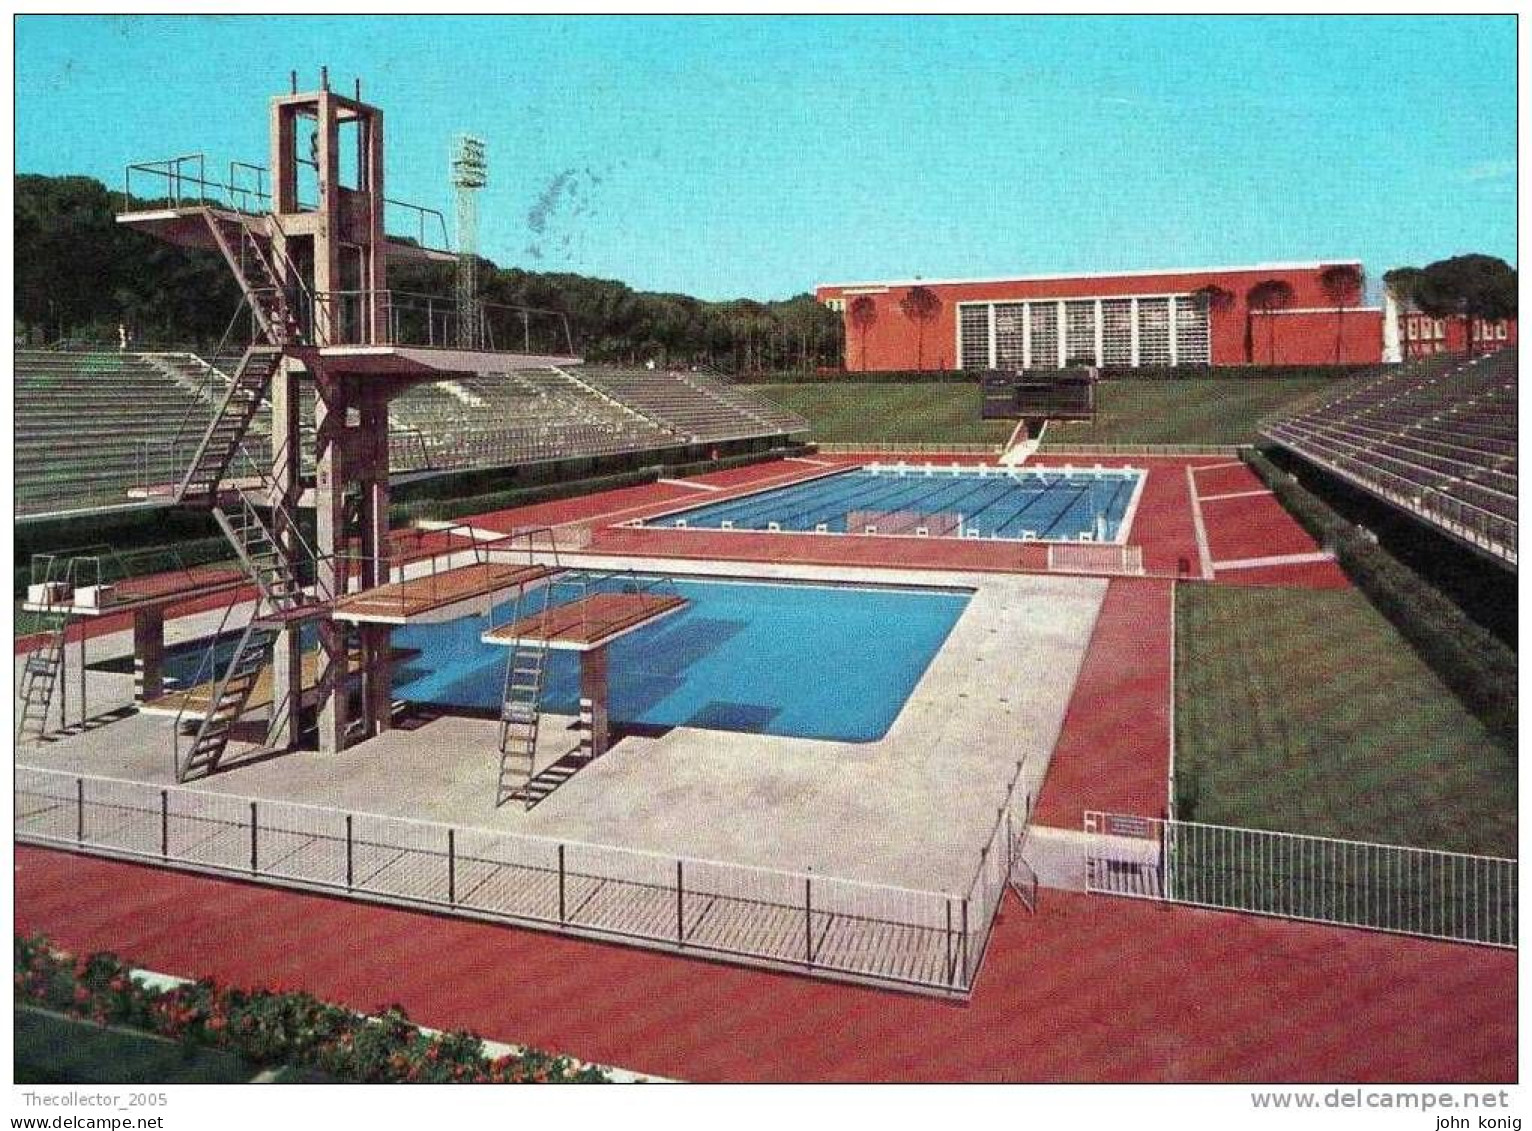 CARTOLINA - POSTCARD - CPT - POSTKARTE - ROMA - FORO ITALICO (1960) - Stadiums & Sporting Infrastructures